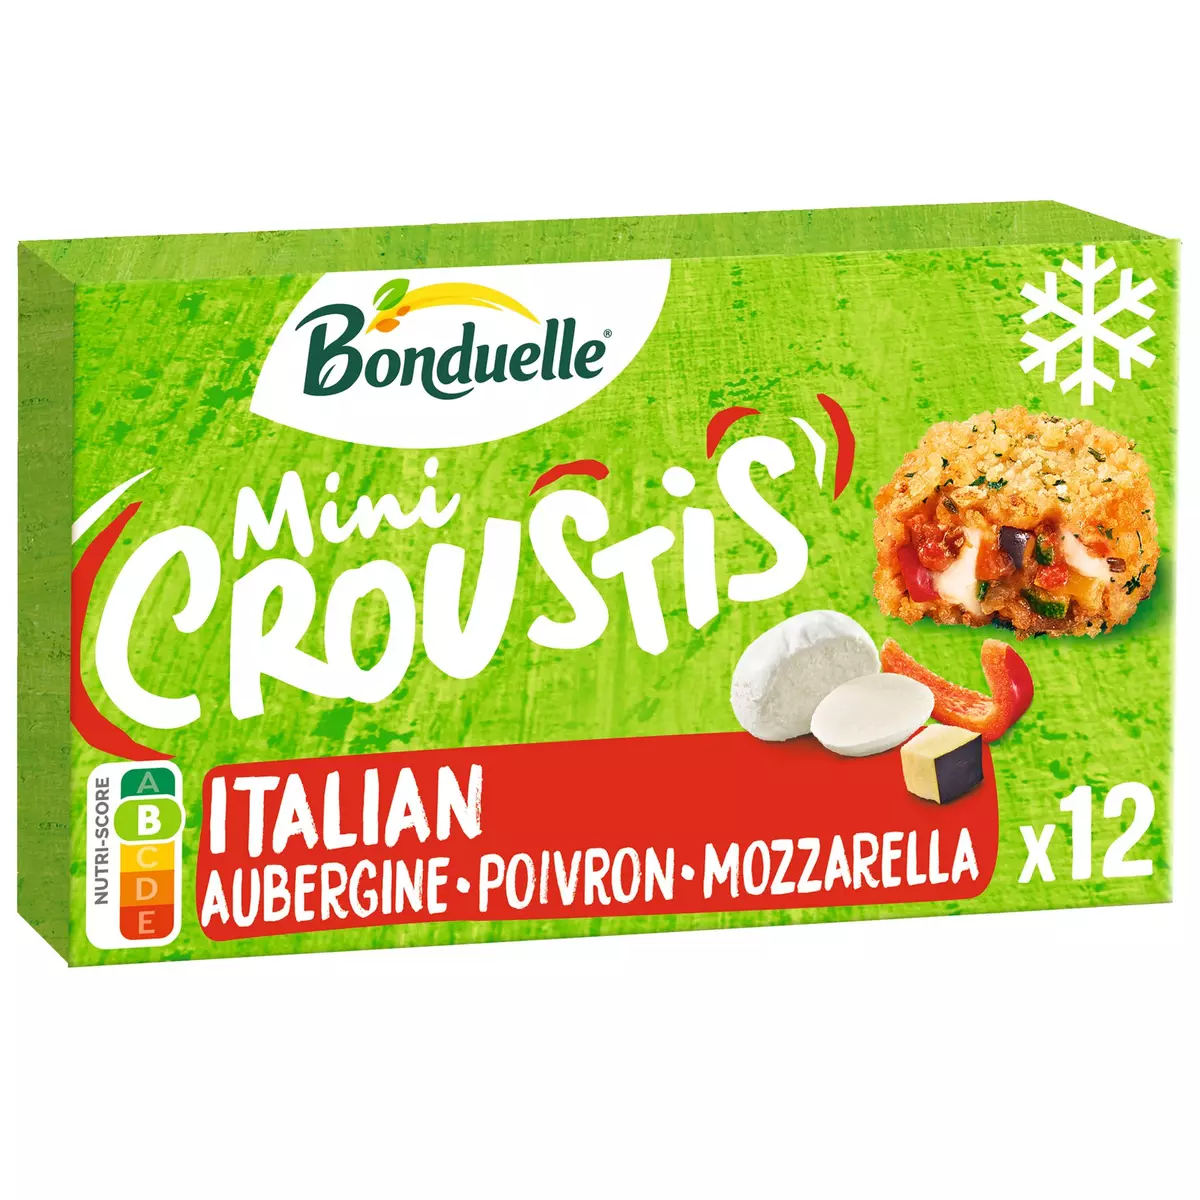 BONDUELLE Mini croustis italian aubergine poivron mozzarella 240g